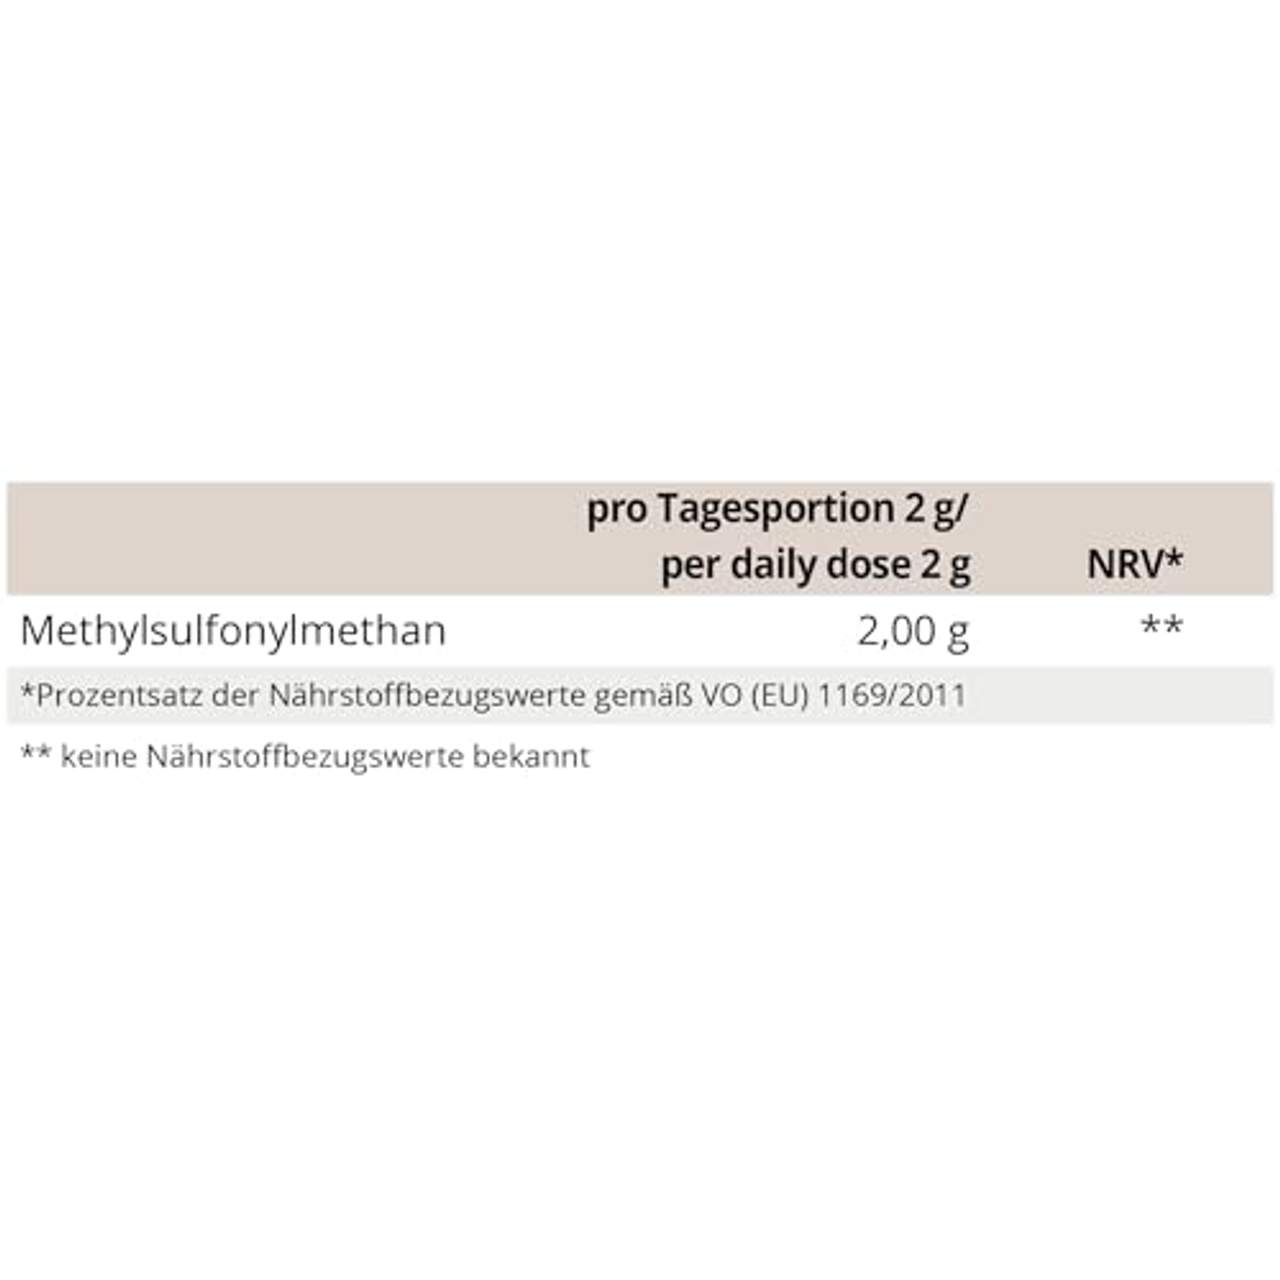 MSM Methylsulfonylmethan Pulver 1kg